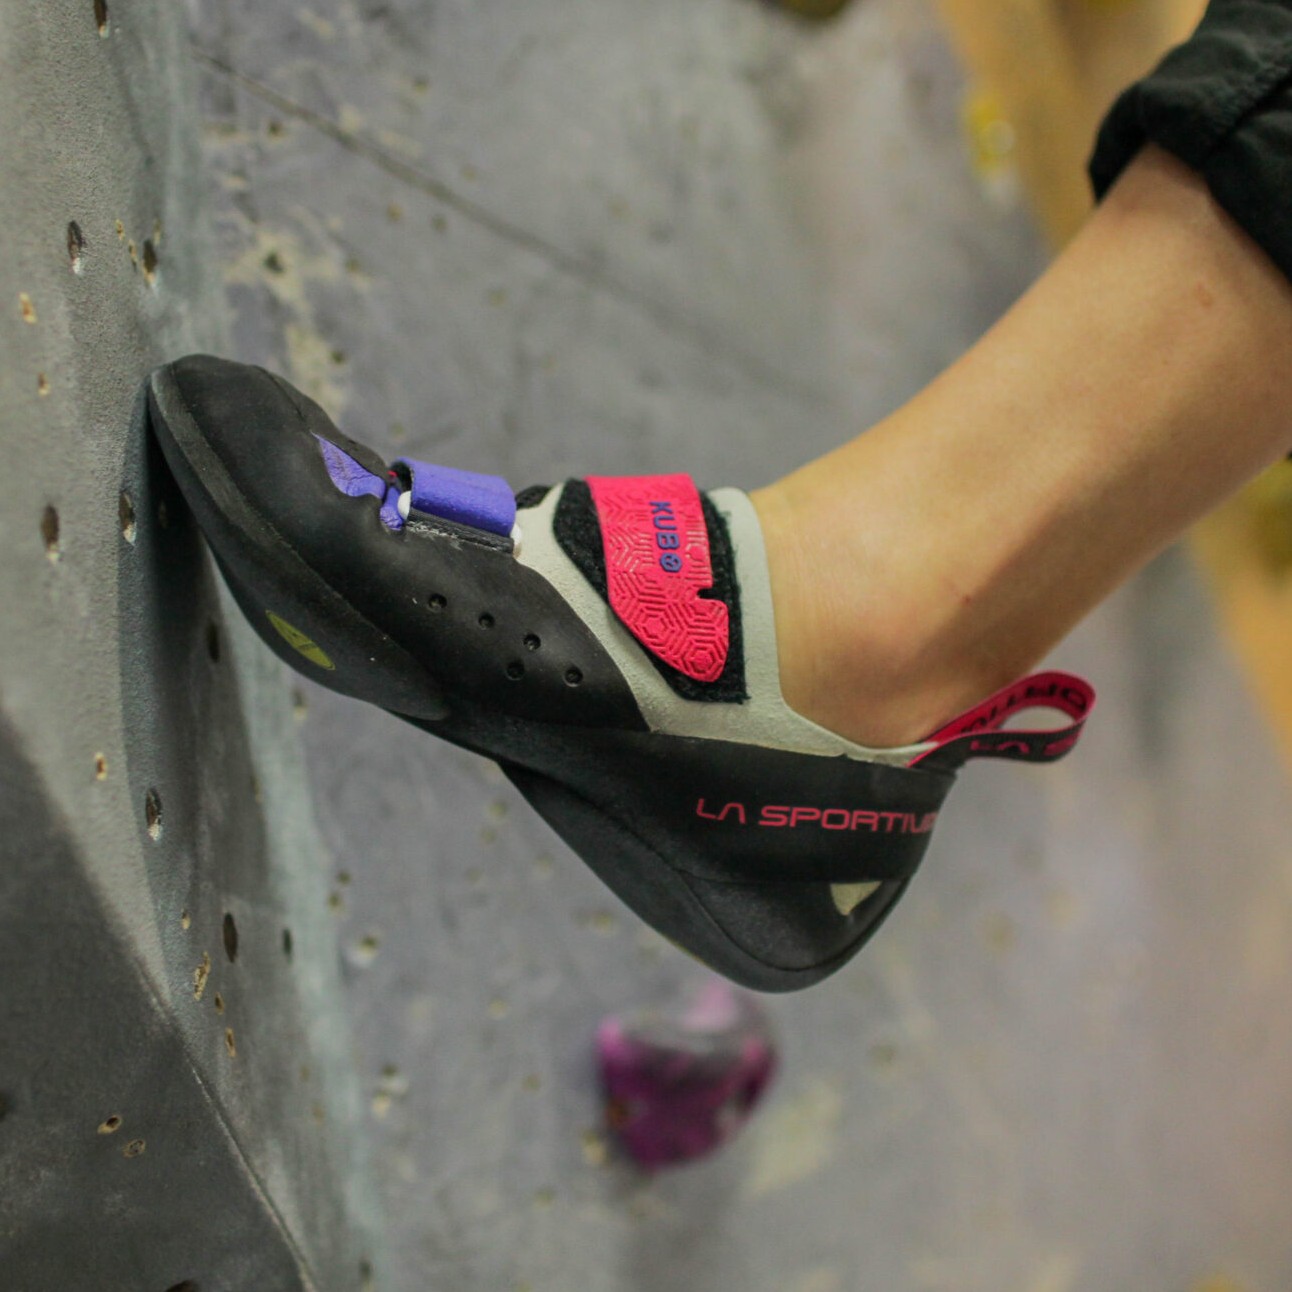 La Sportiva Kubo Women's Climbing Shoe